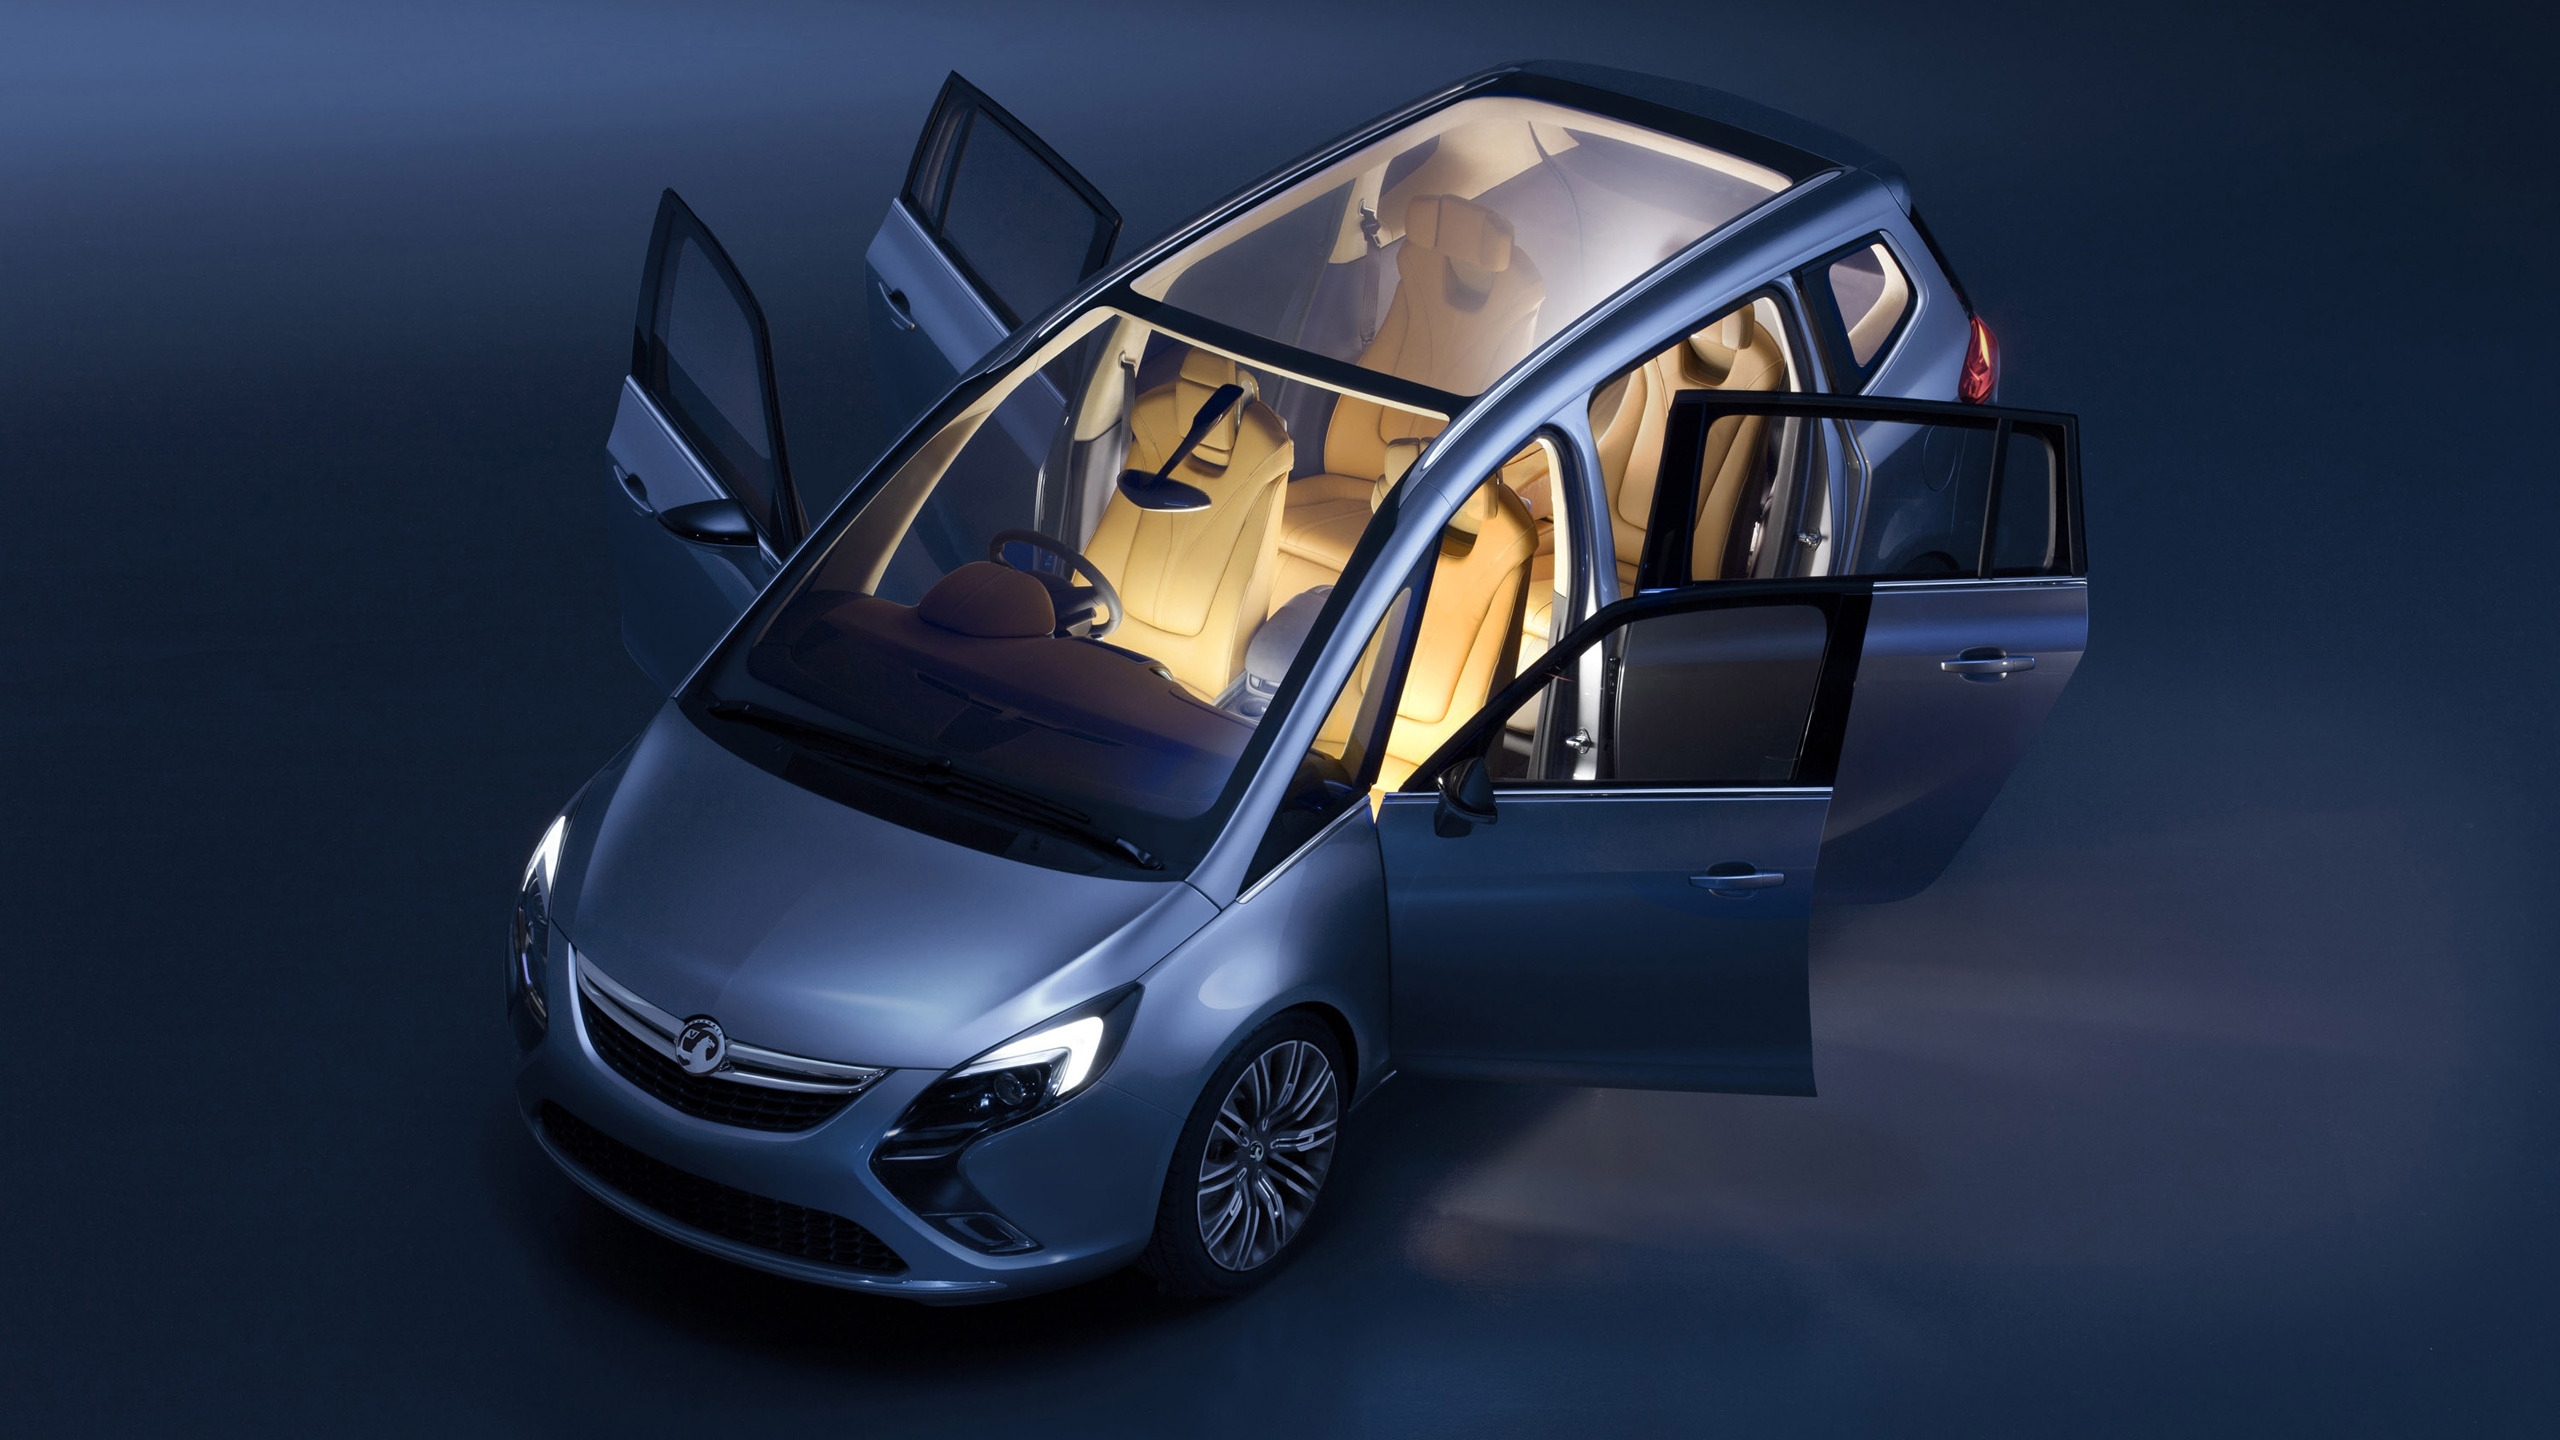 Opel Zafira Tourer Concept Studio for 2560x1440 HDTV resolution